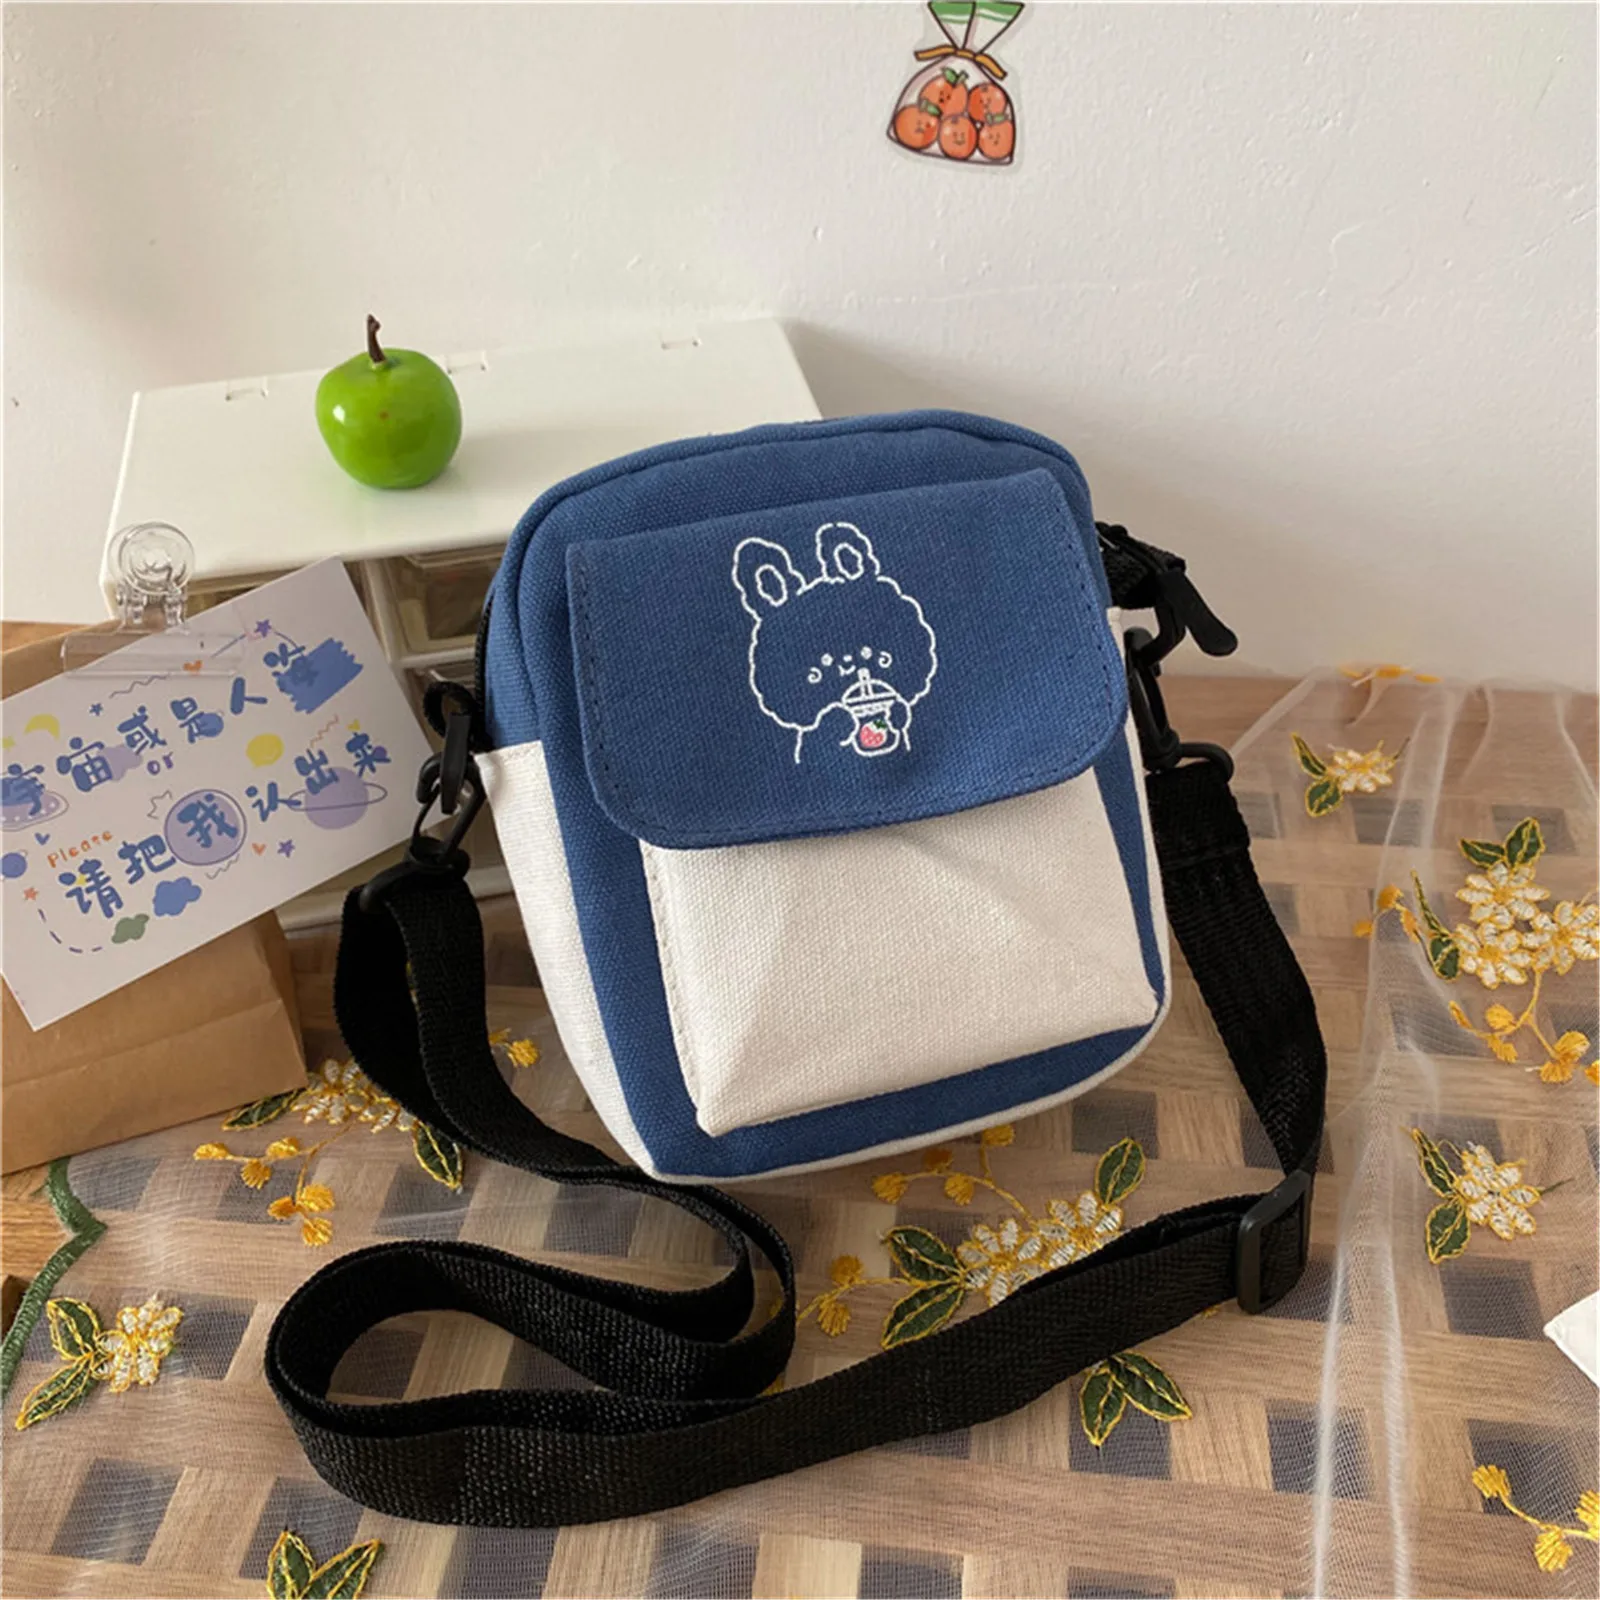 Ssbody bags small cartoon rabbit printed messenger bag fashion casual handbag for girl thumb200